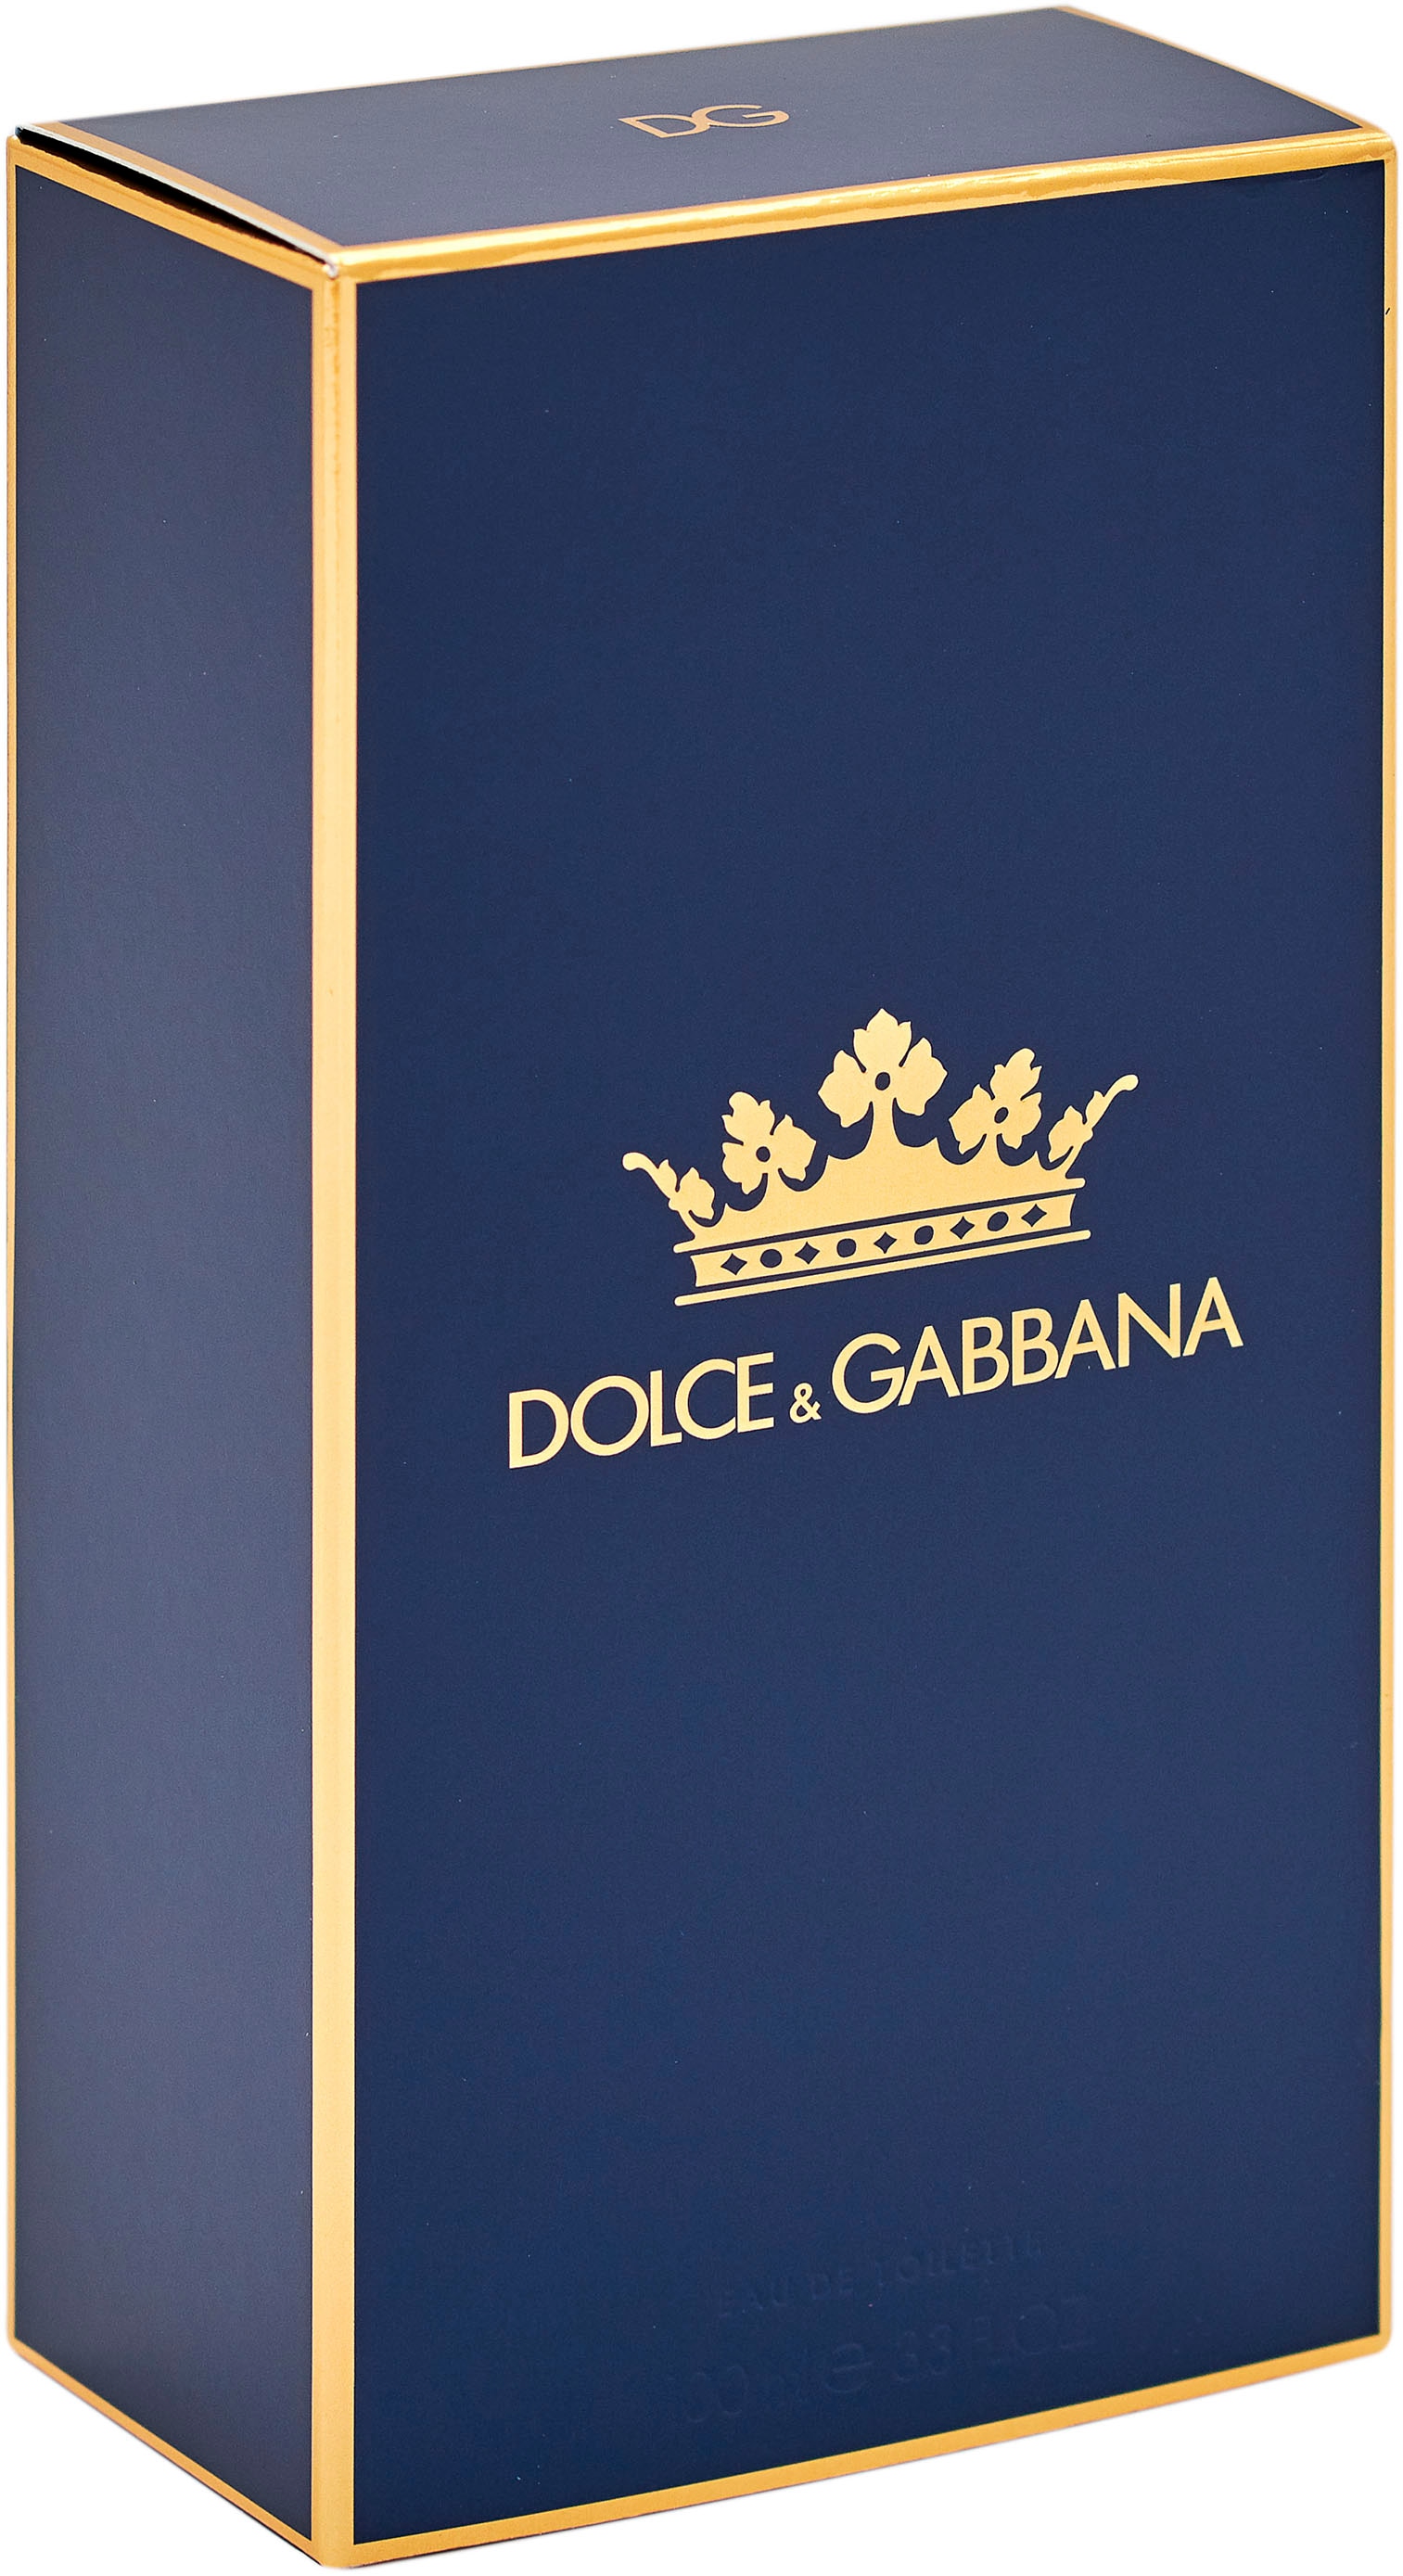 DOLCE & GABBANA Eau de Toilette »Dolce&Gabbana K«